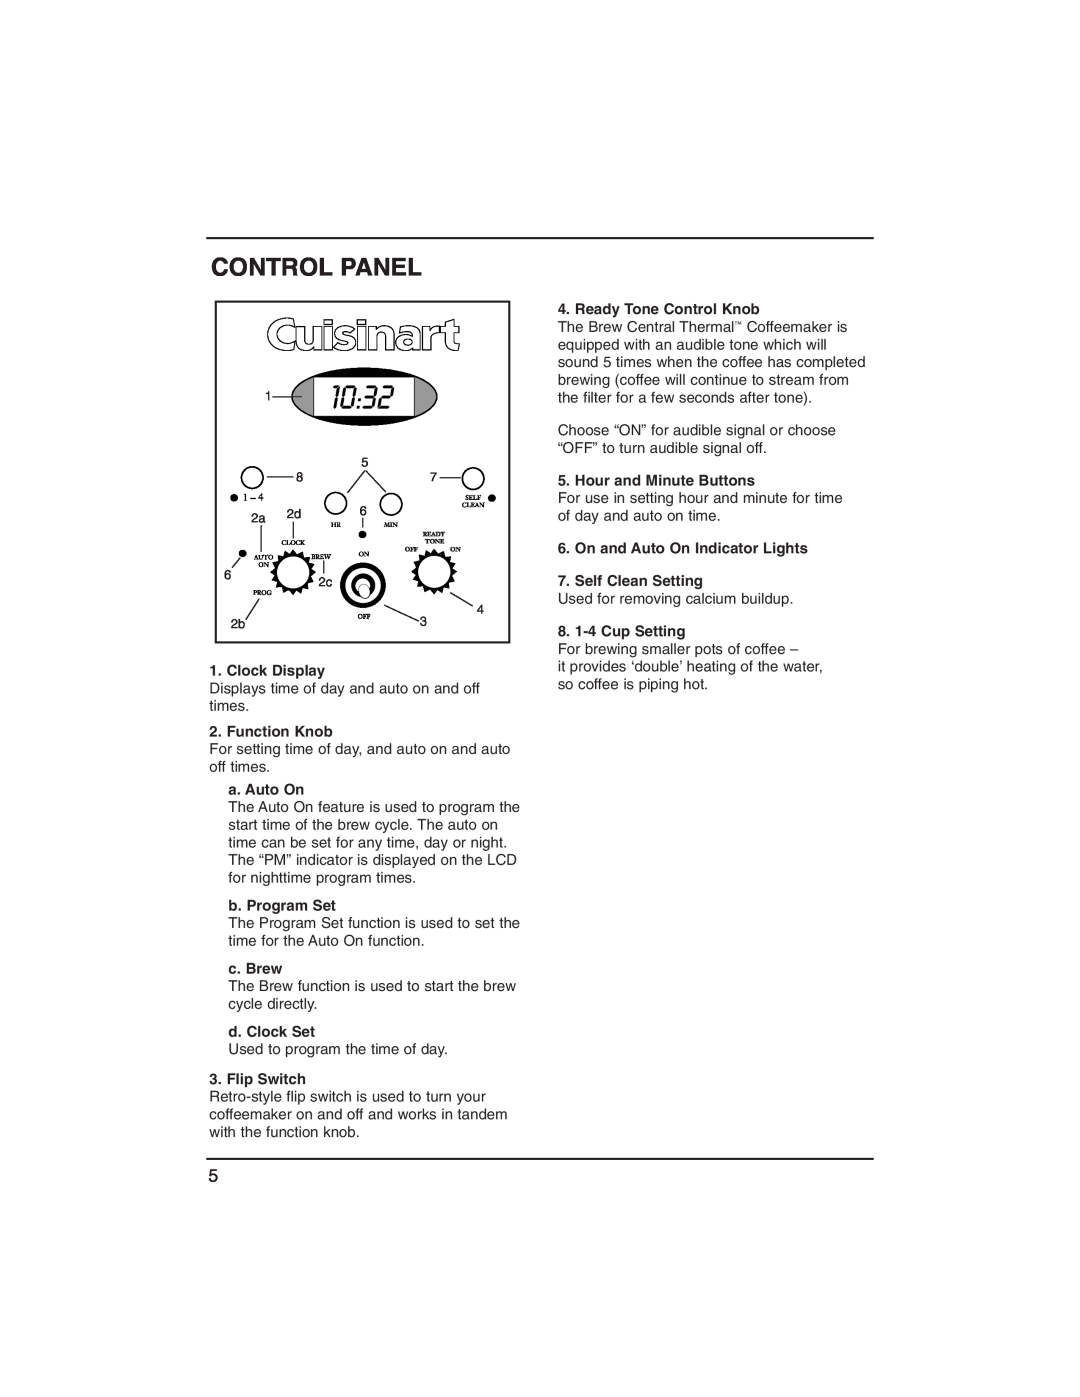 Cuisinart DCC-1400C manual Control Panel, Clock Display, Function Knob, a. Auto On, b. Program Set, c. Brew, d. Clock Set 